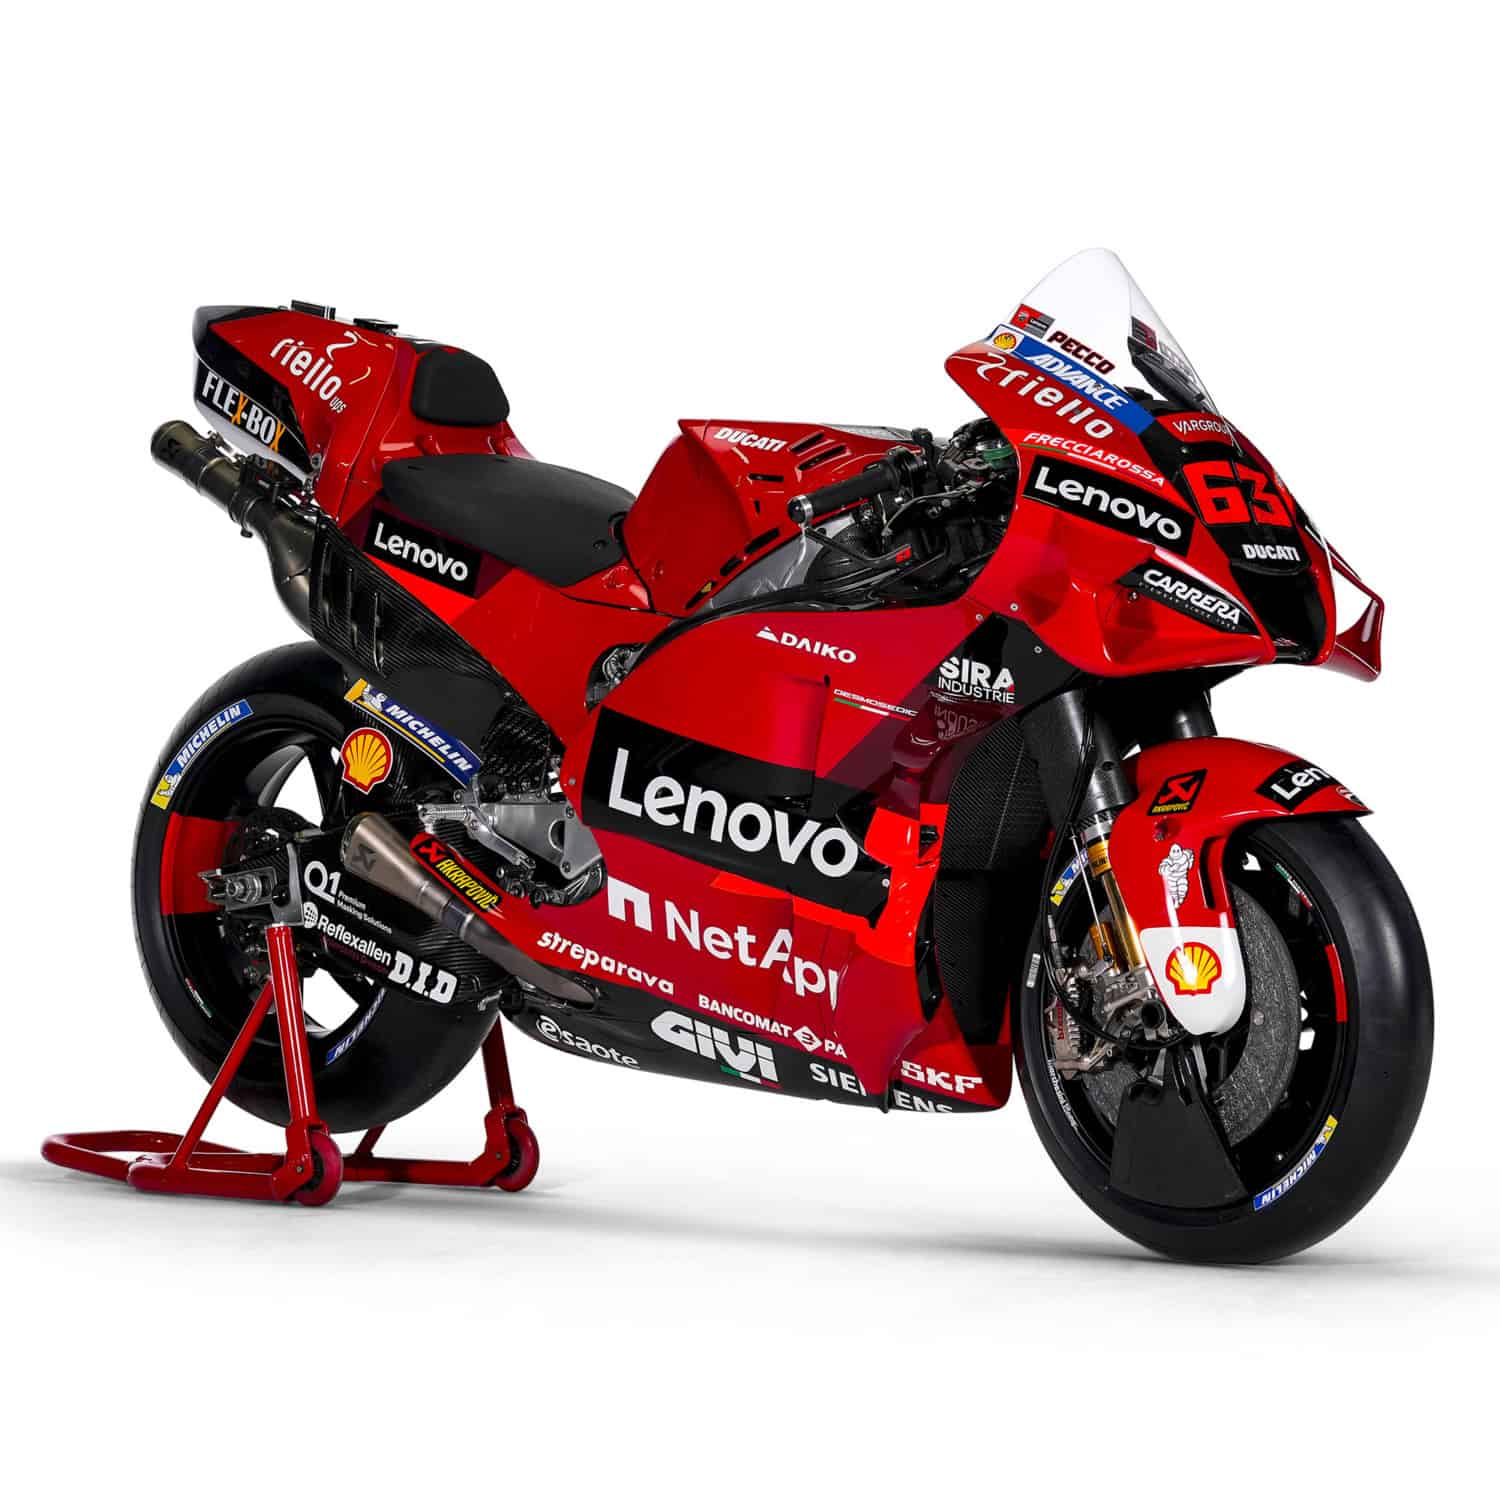 MotoGP: Se dagens Ducati Lenovo Team præsentation.